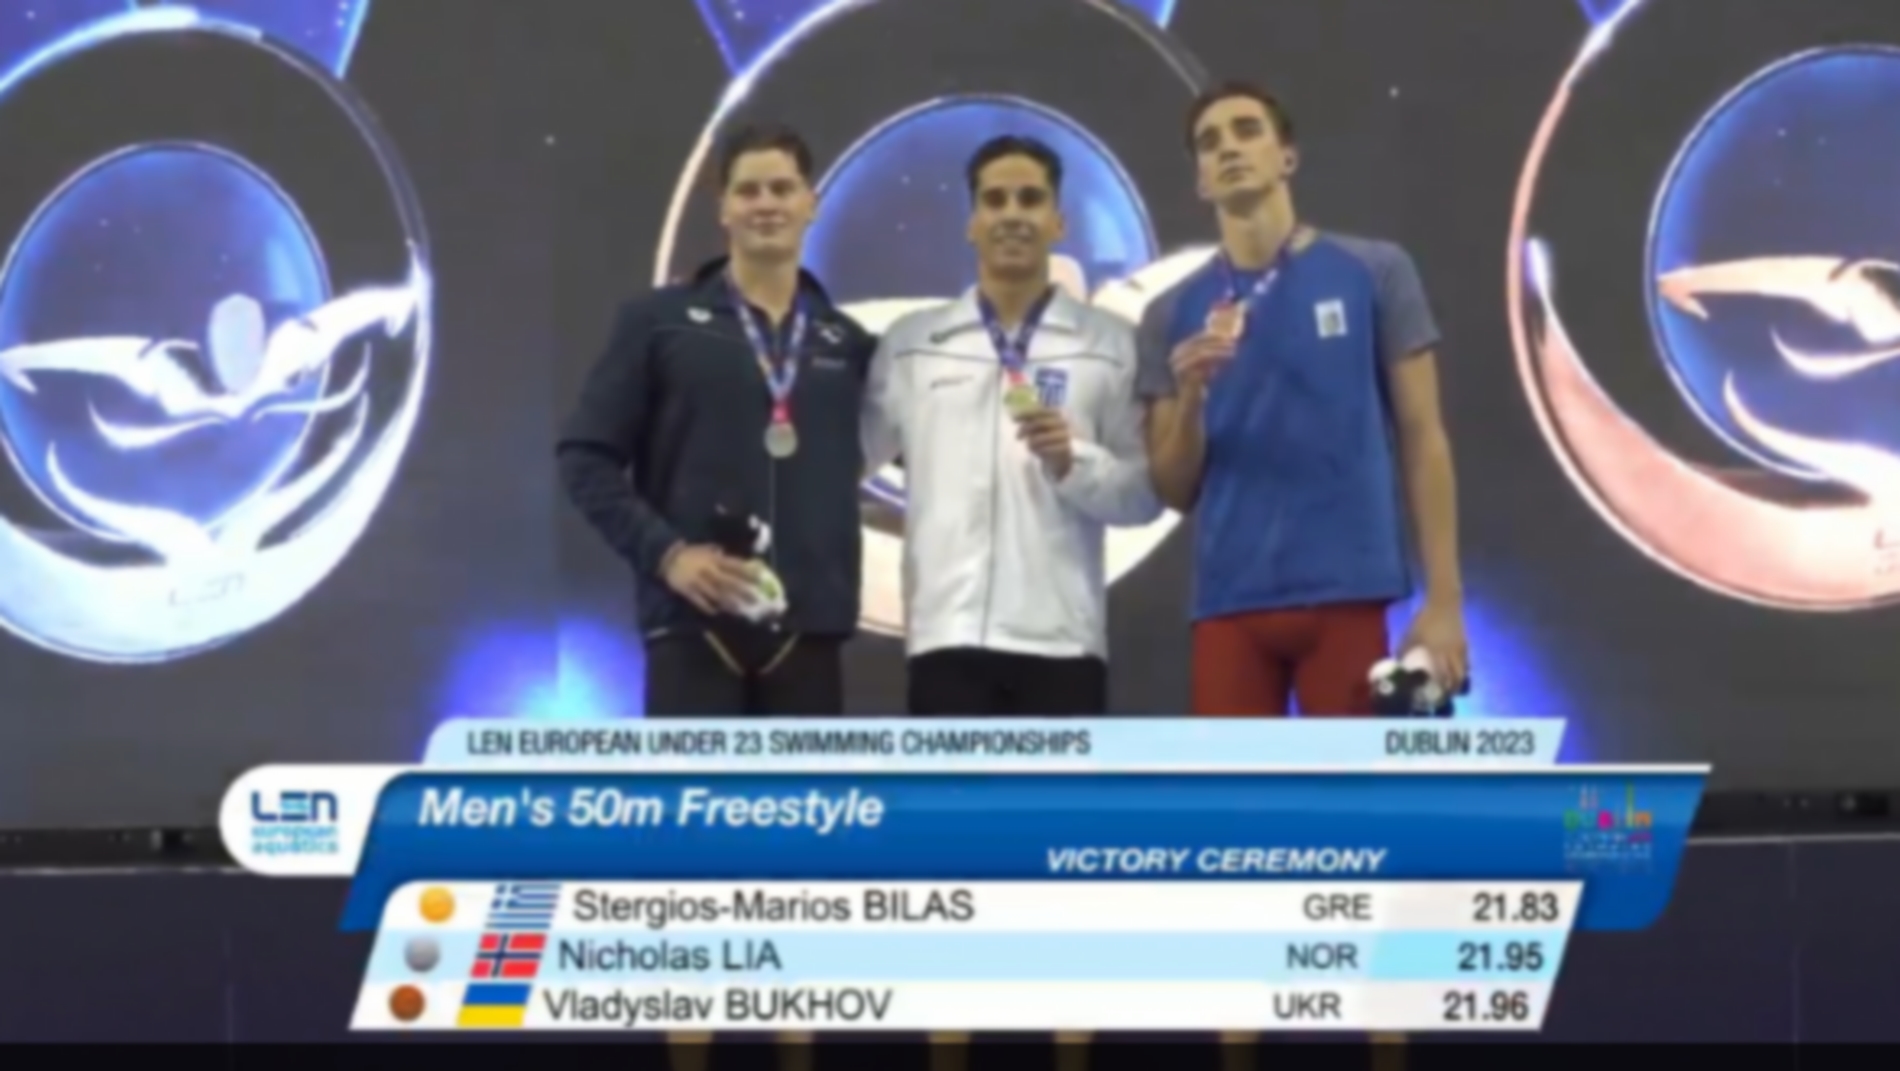 O Μάριος Στέργιος Μπίλας κατέκτησε το χρυσό μετάλλιο στα 50 μέτρα ελεύθερο της κολύμβησης